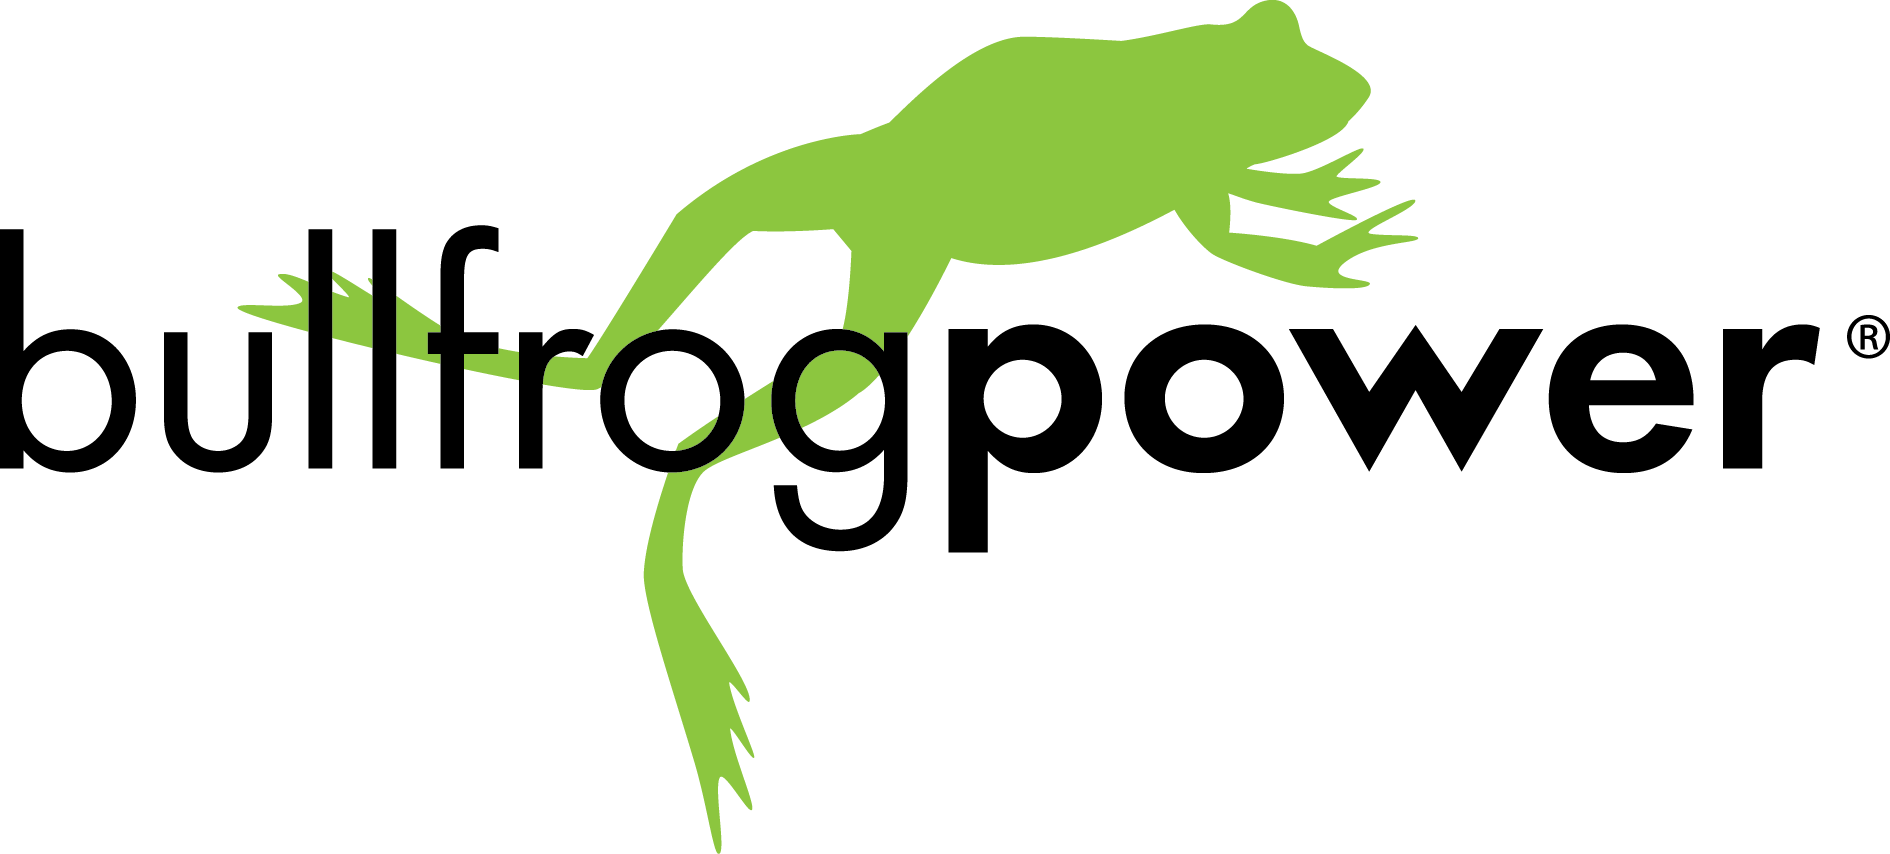 Bullfrog Energy Renewable Power Logo Free HQ Image Clipart